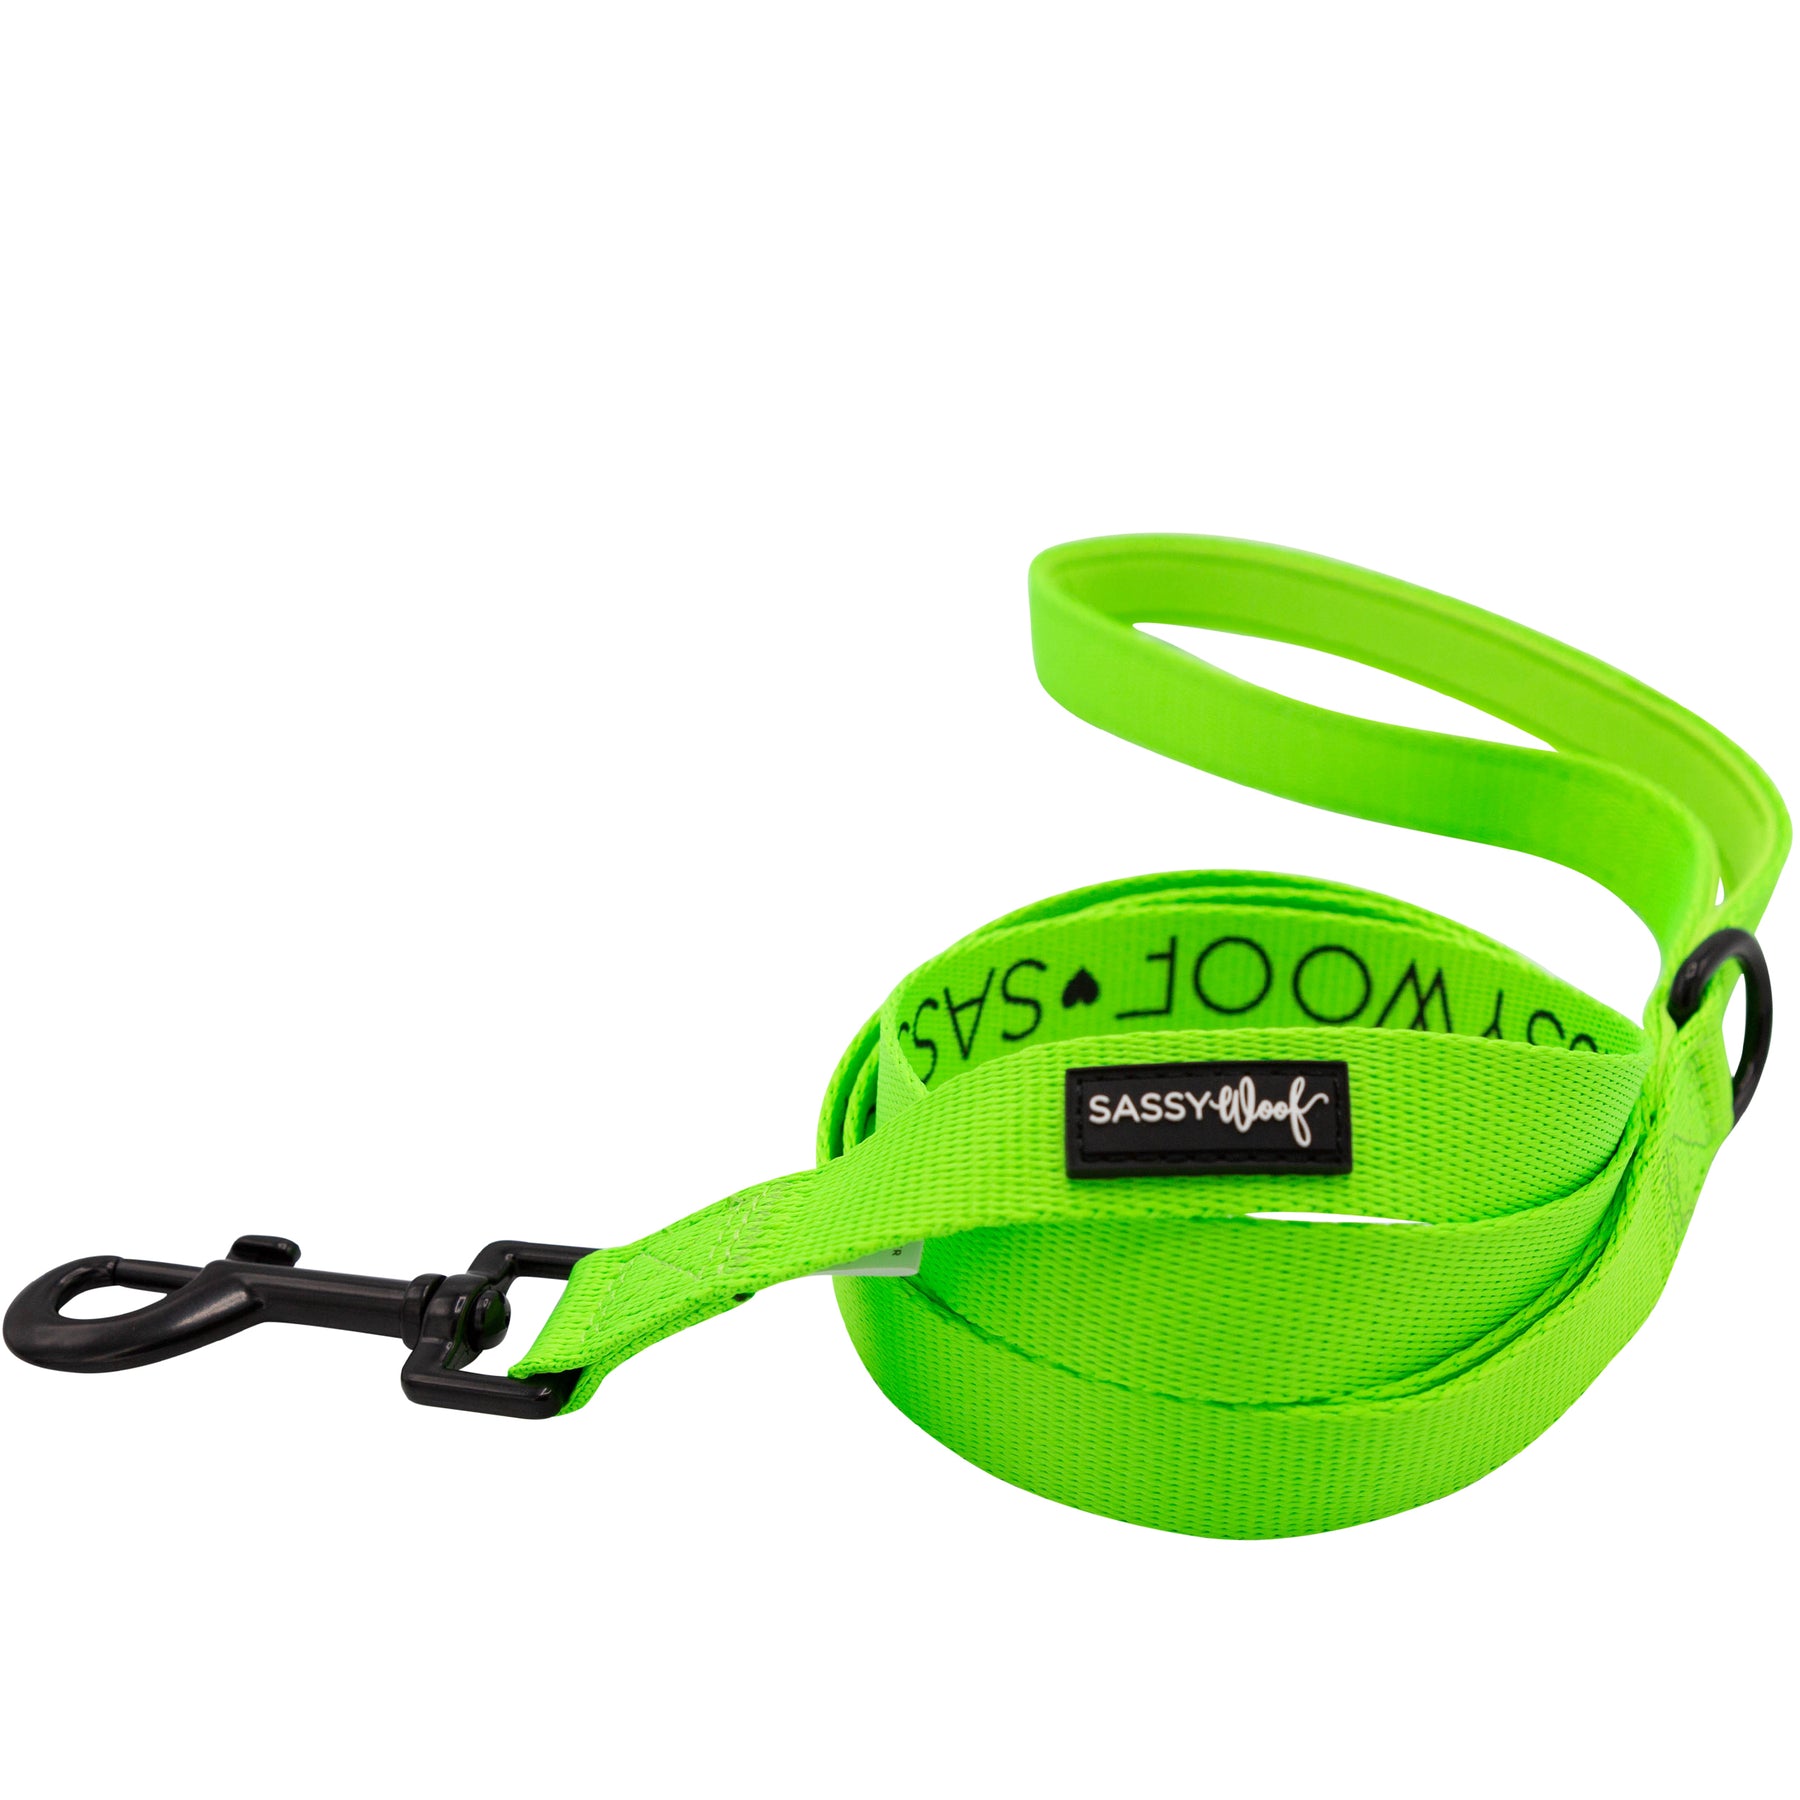 Collar Three Piece Bundle - Neon Green